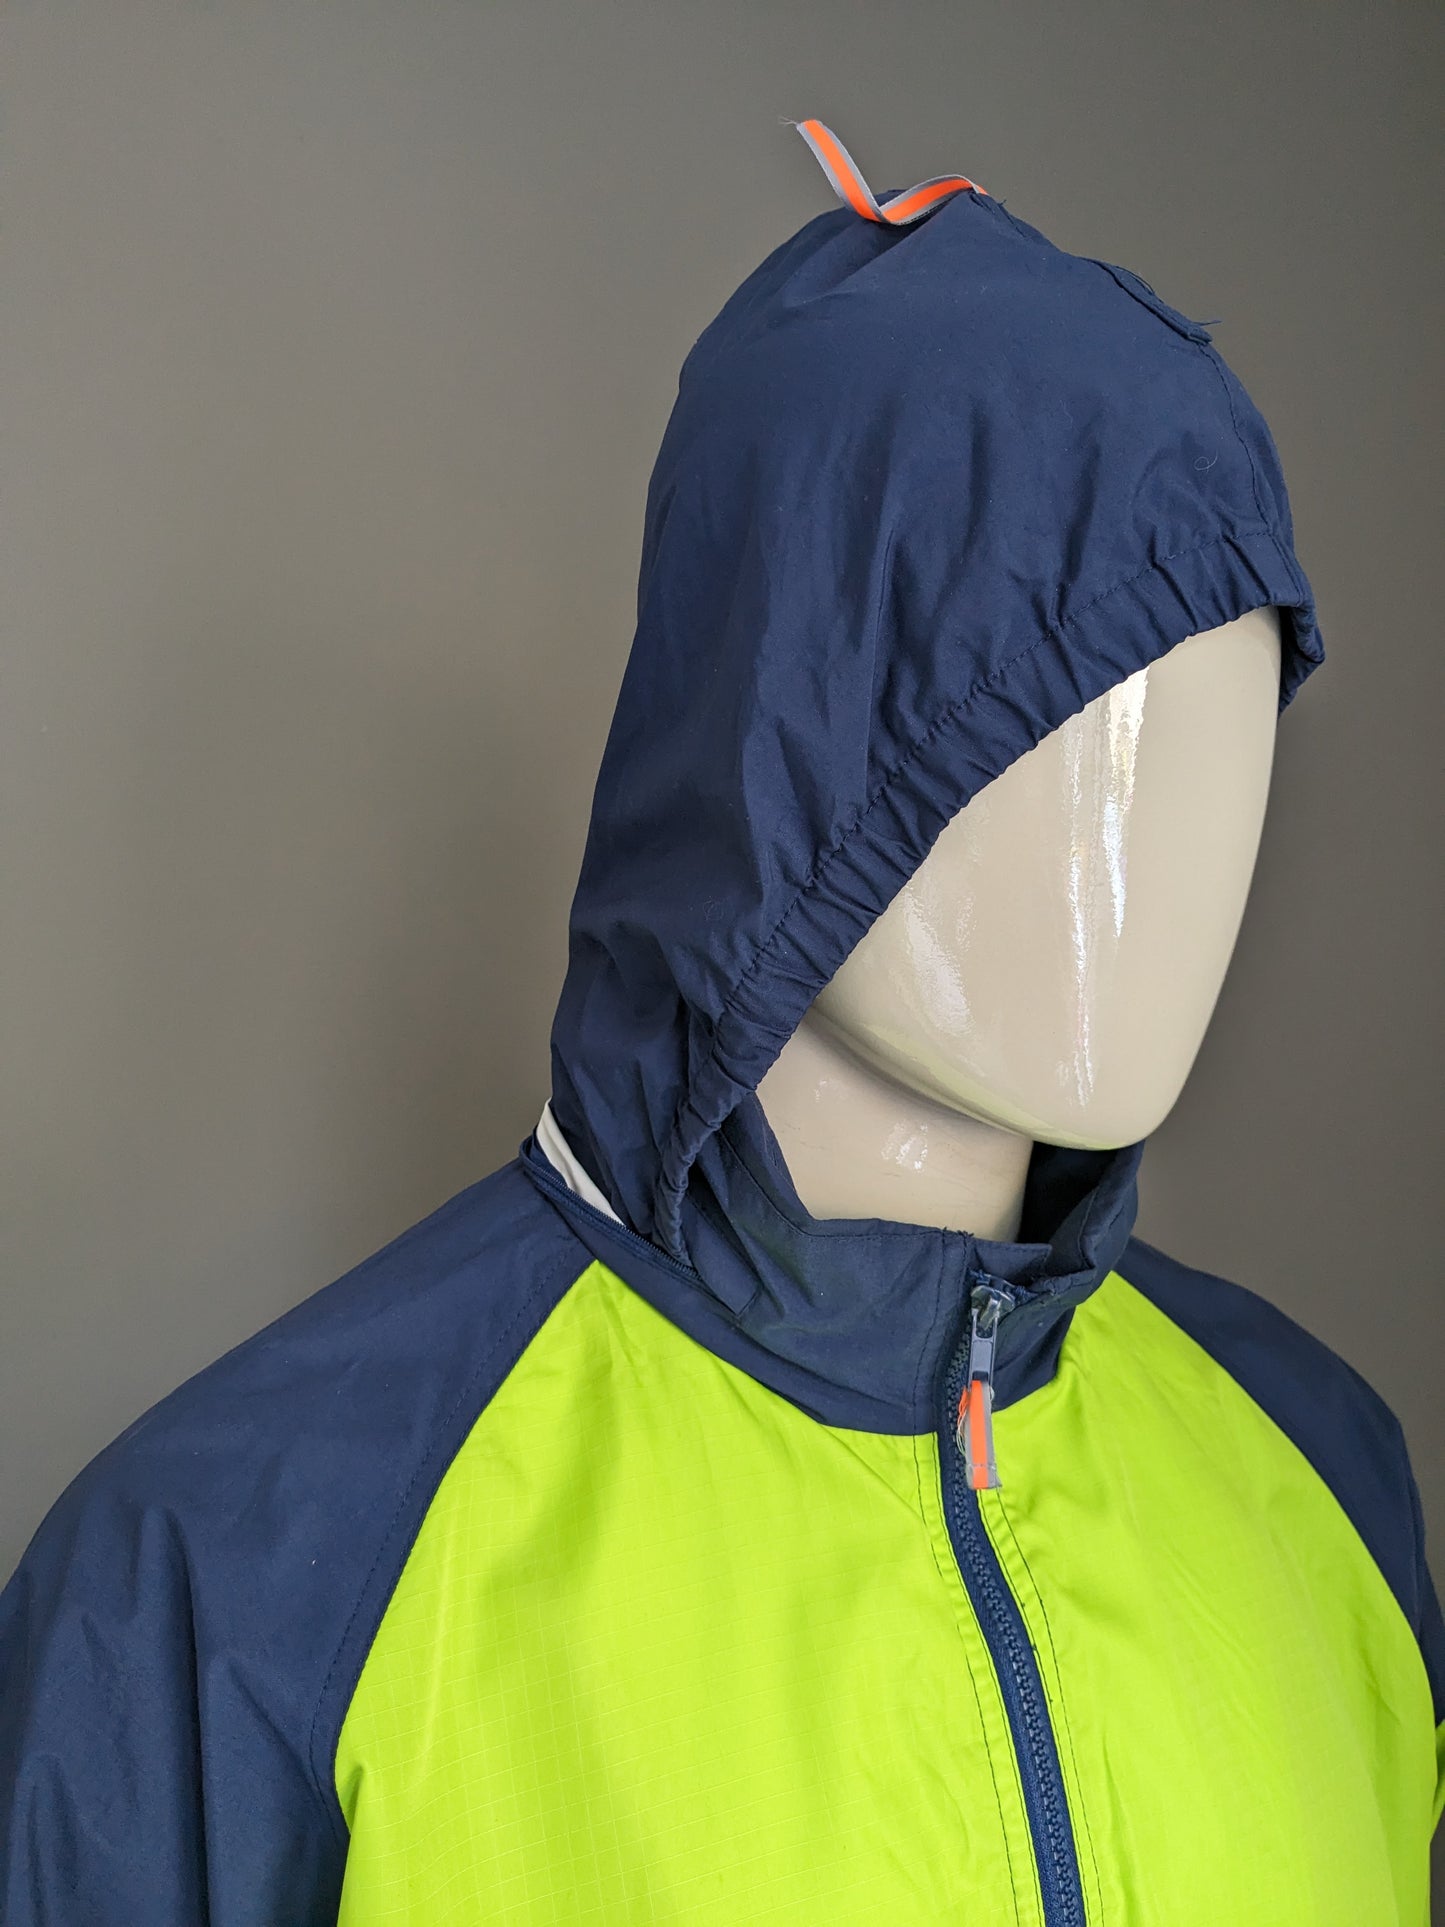 Adidas "Delfi 1000" jas / jack. Geel Blauw gekleurd. Maat XL.